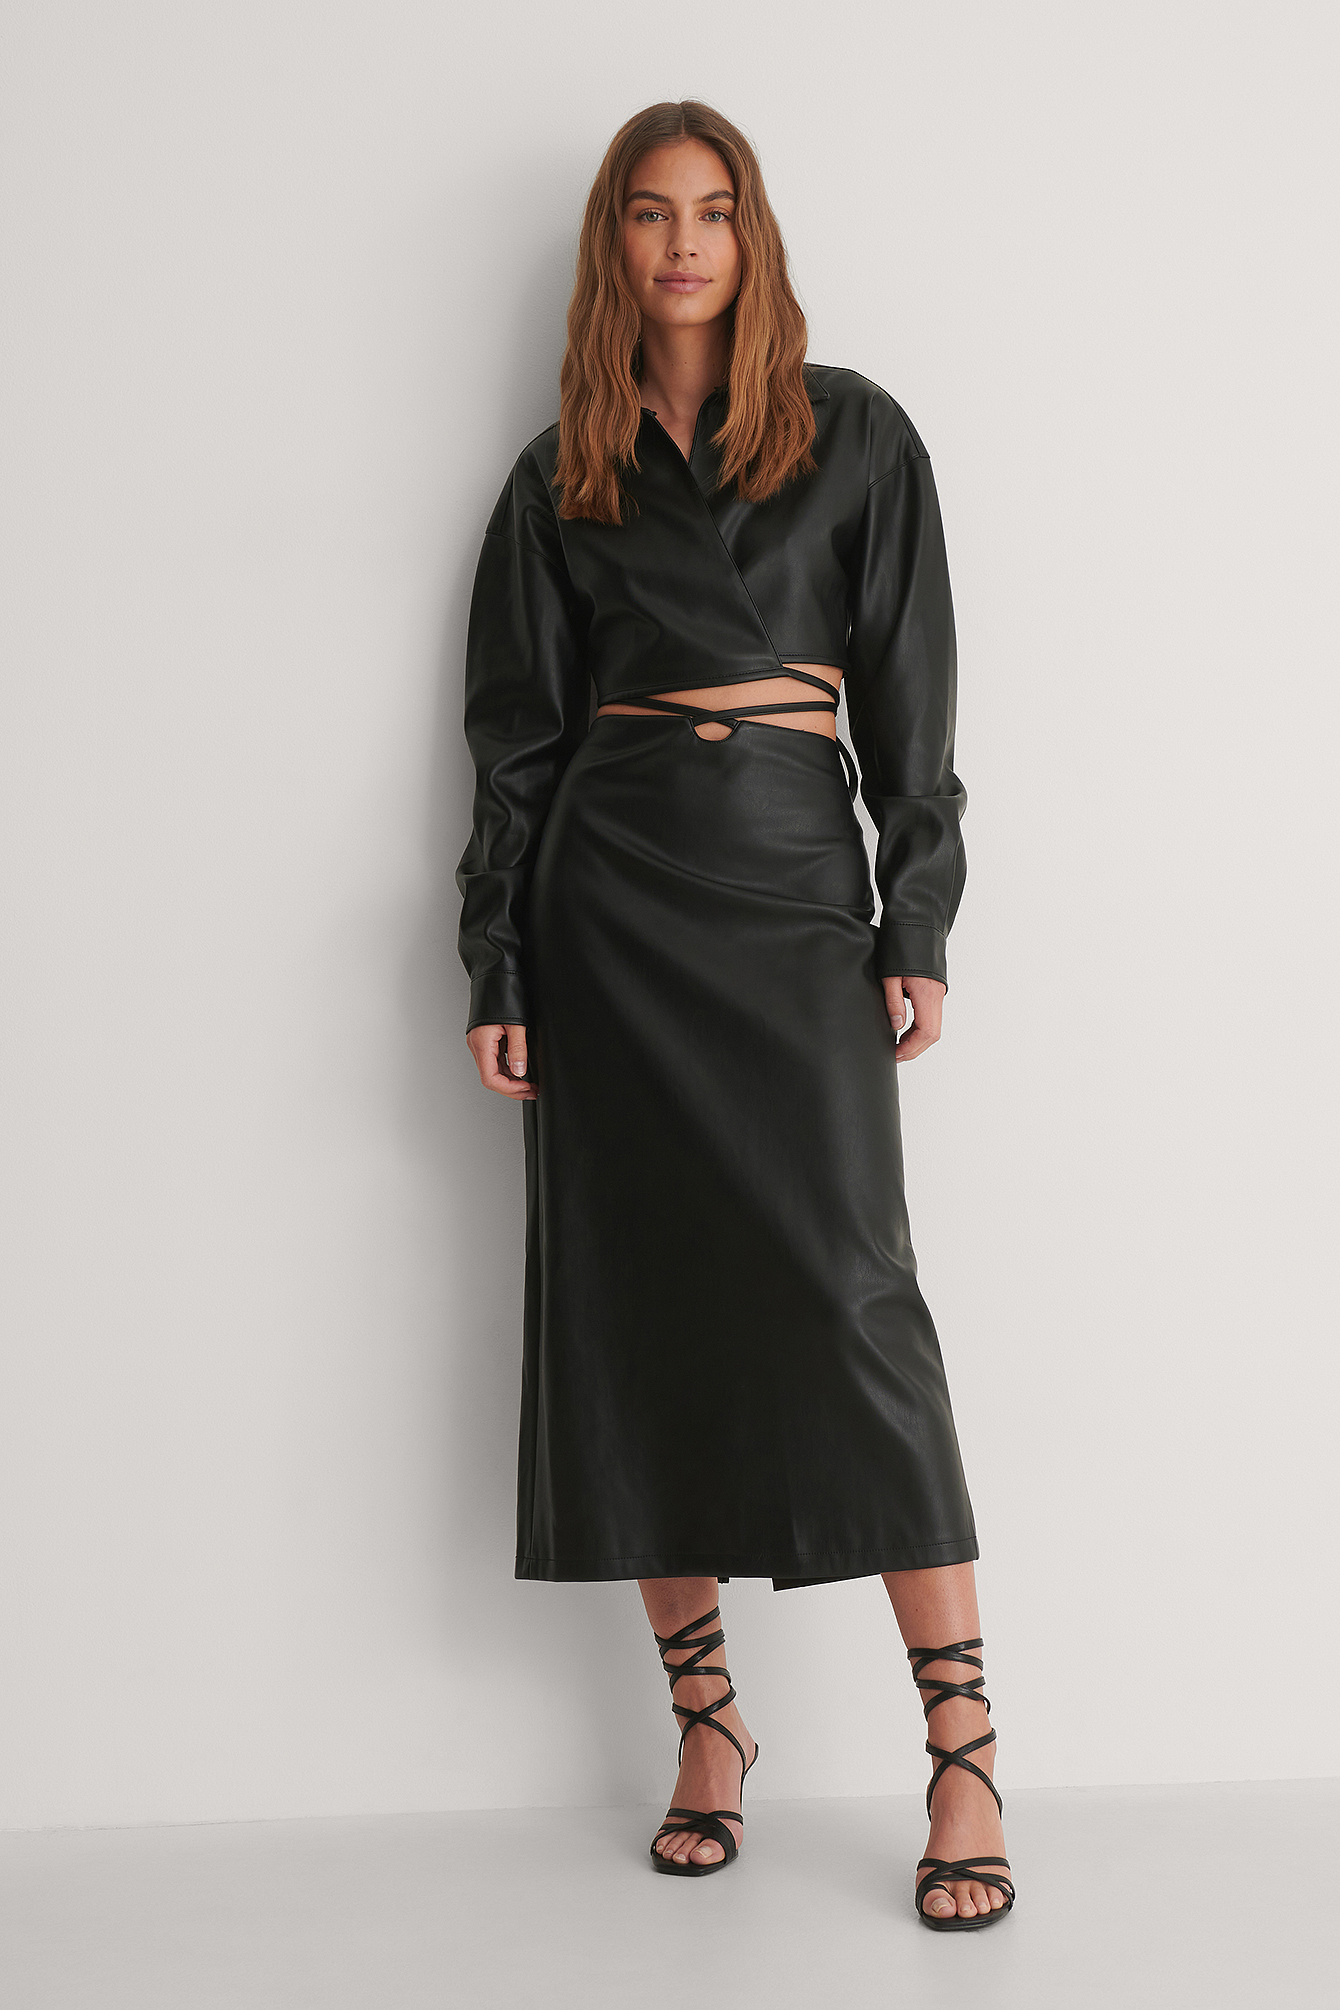 Damen Bekleidung Jacken Lederjacken NA-KD Synthetik Trend PU taillierter Rock in Schwarz 